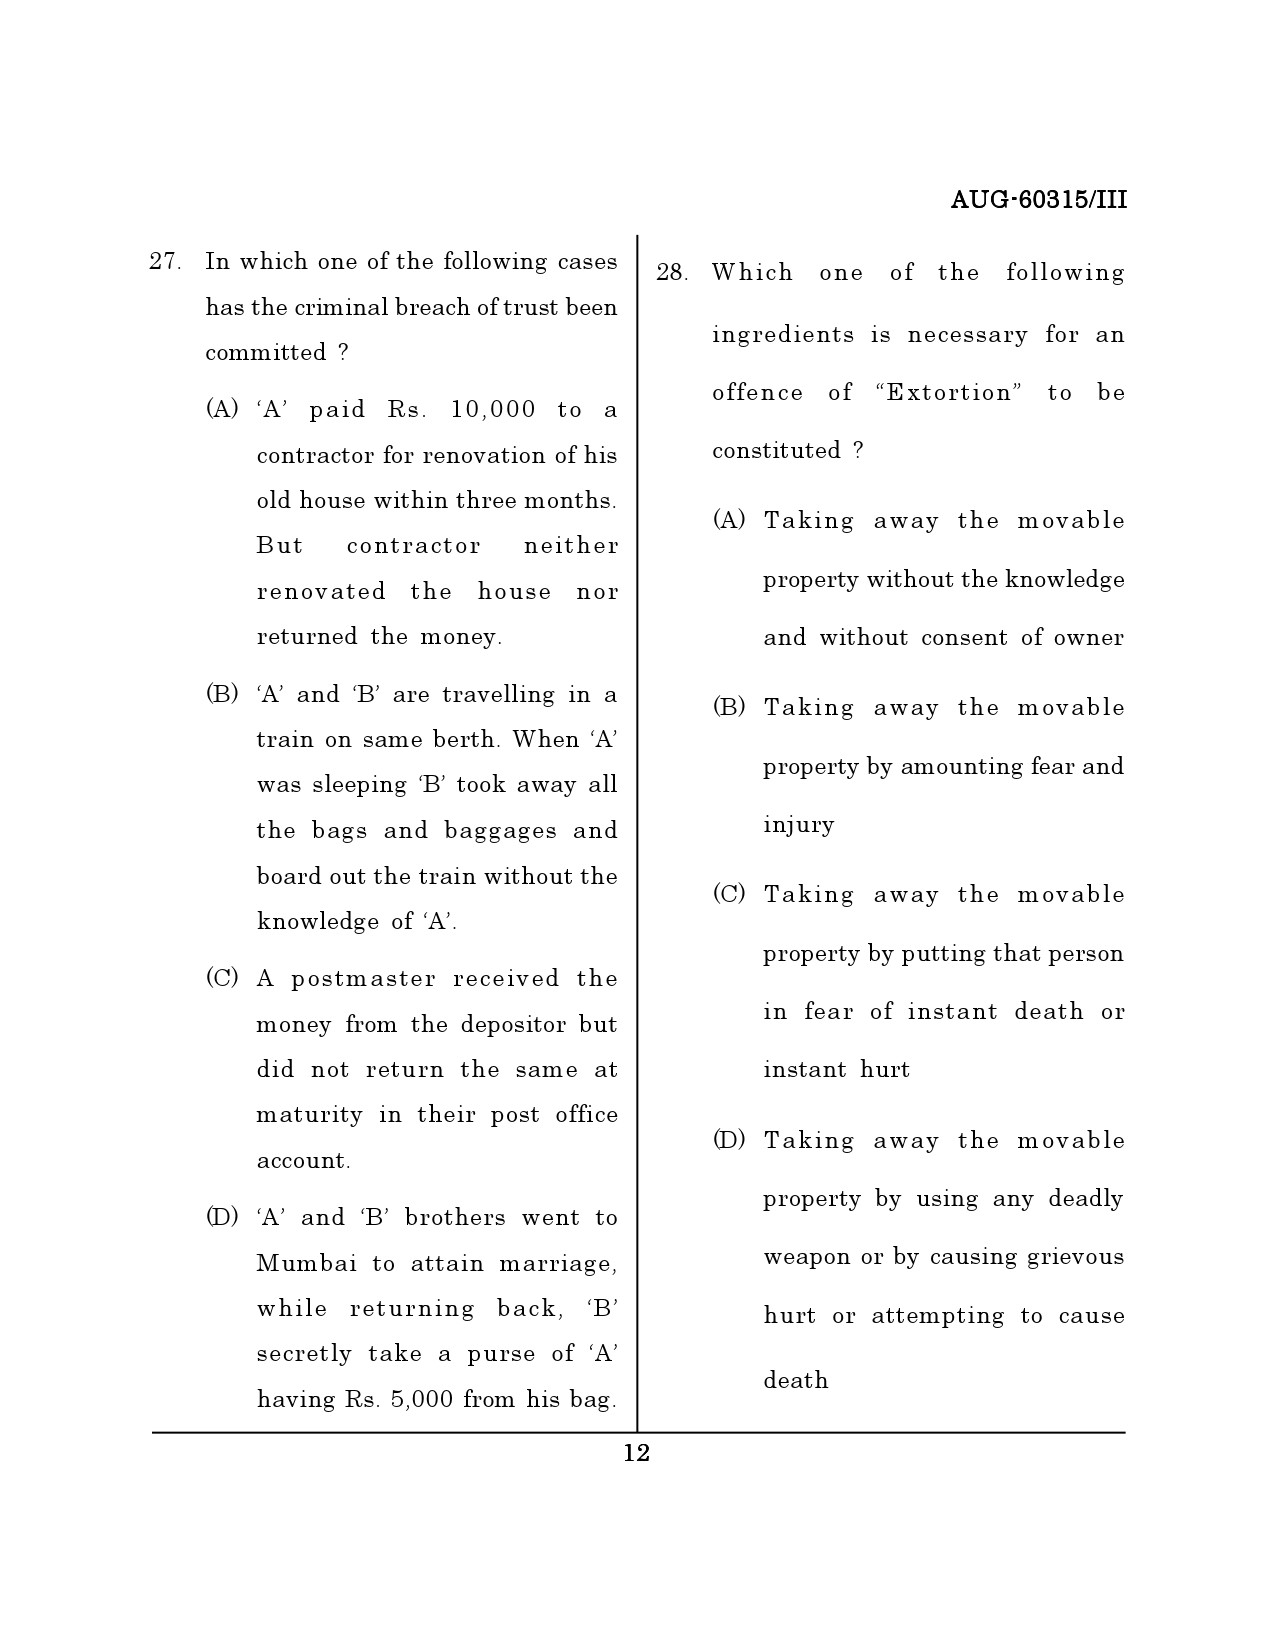 Maharashtra SET Law Question Paper III August 2015 11